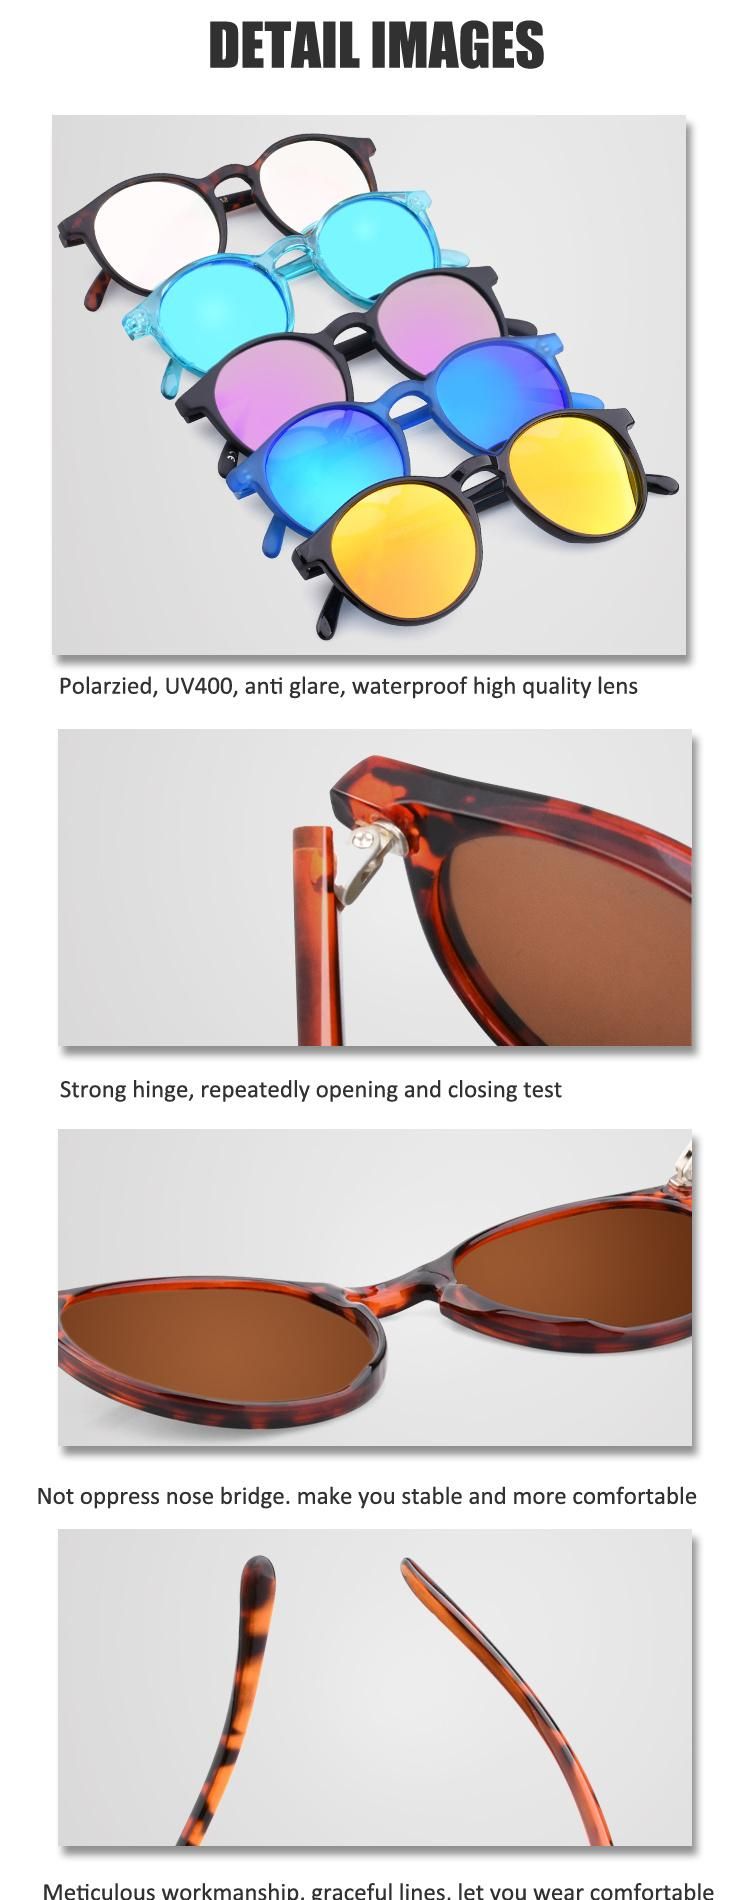 Usom New Women′ S Polarized Round Sunglasses for Brazil Market